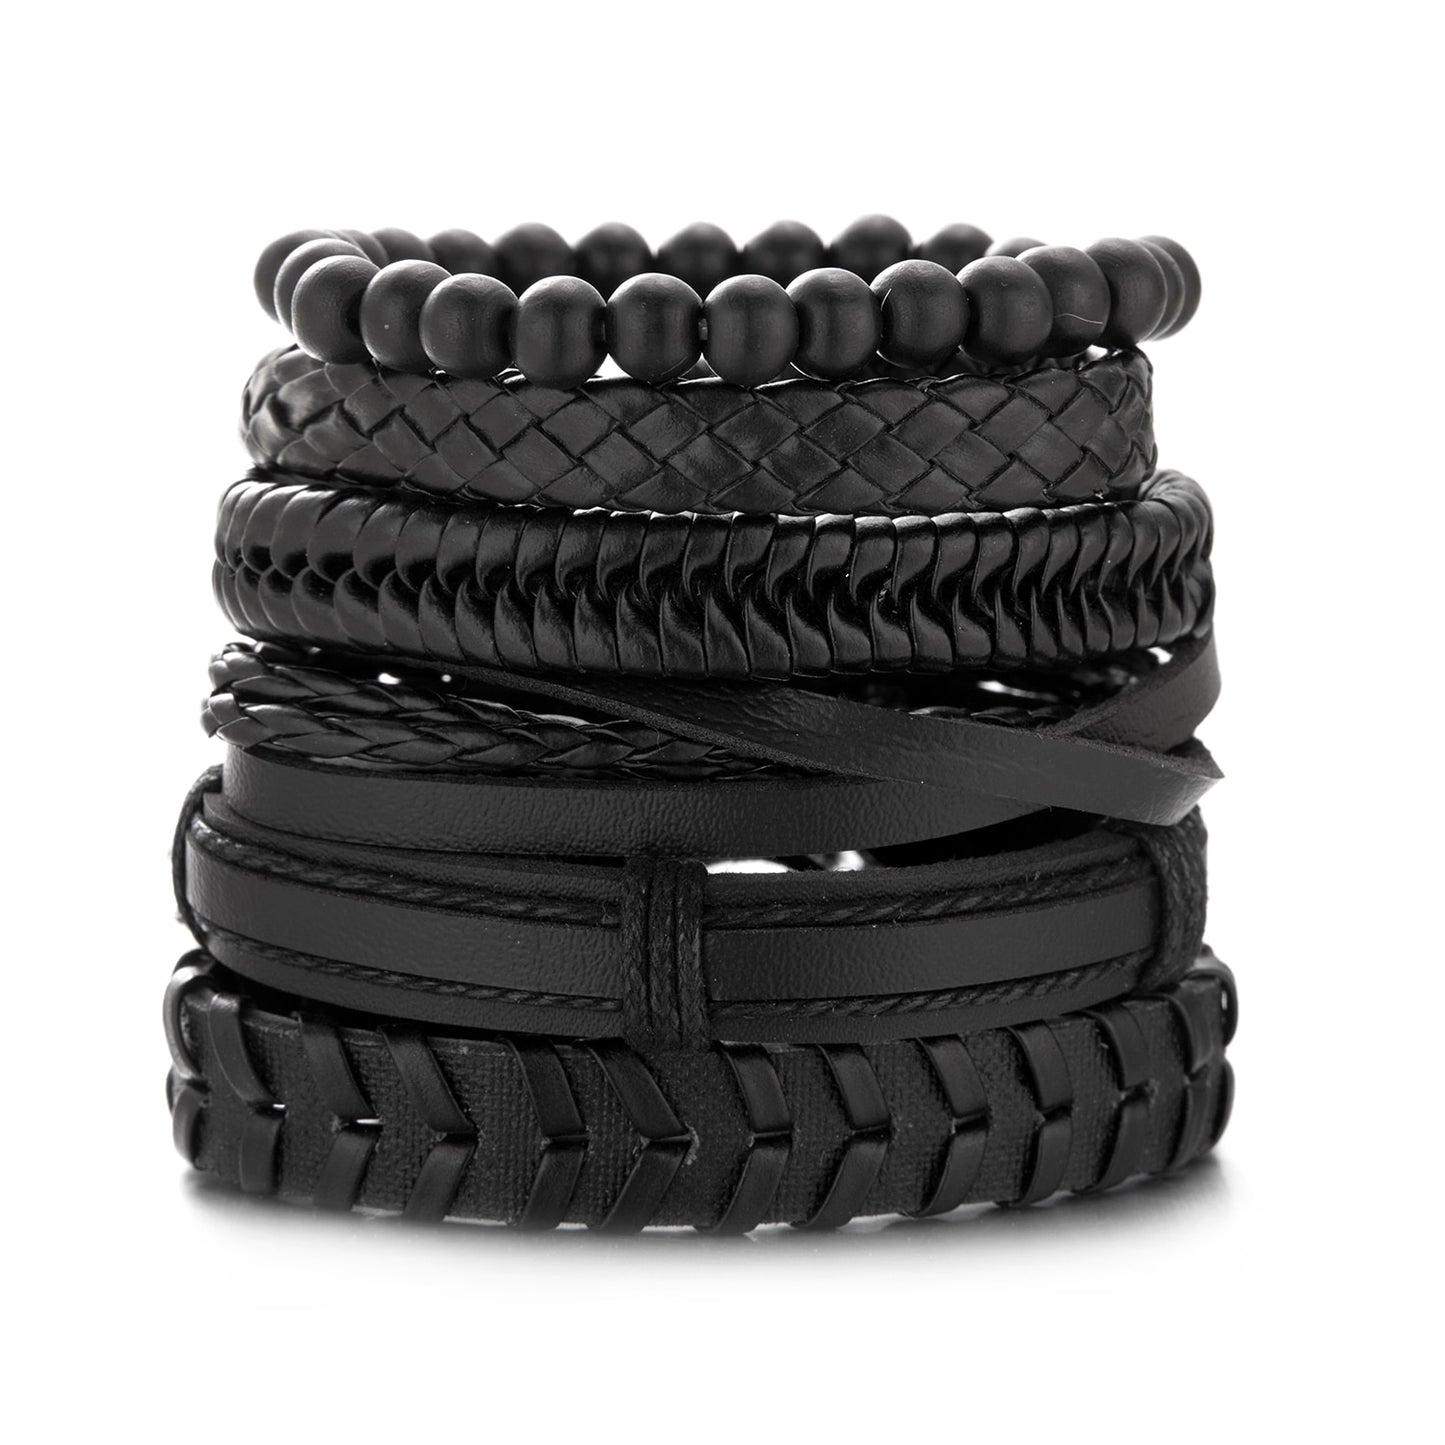 Everyday Leather Bracelet For Men